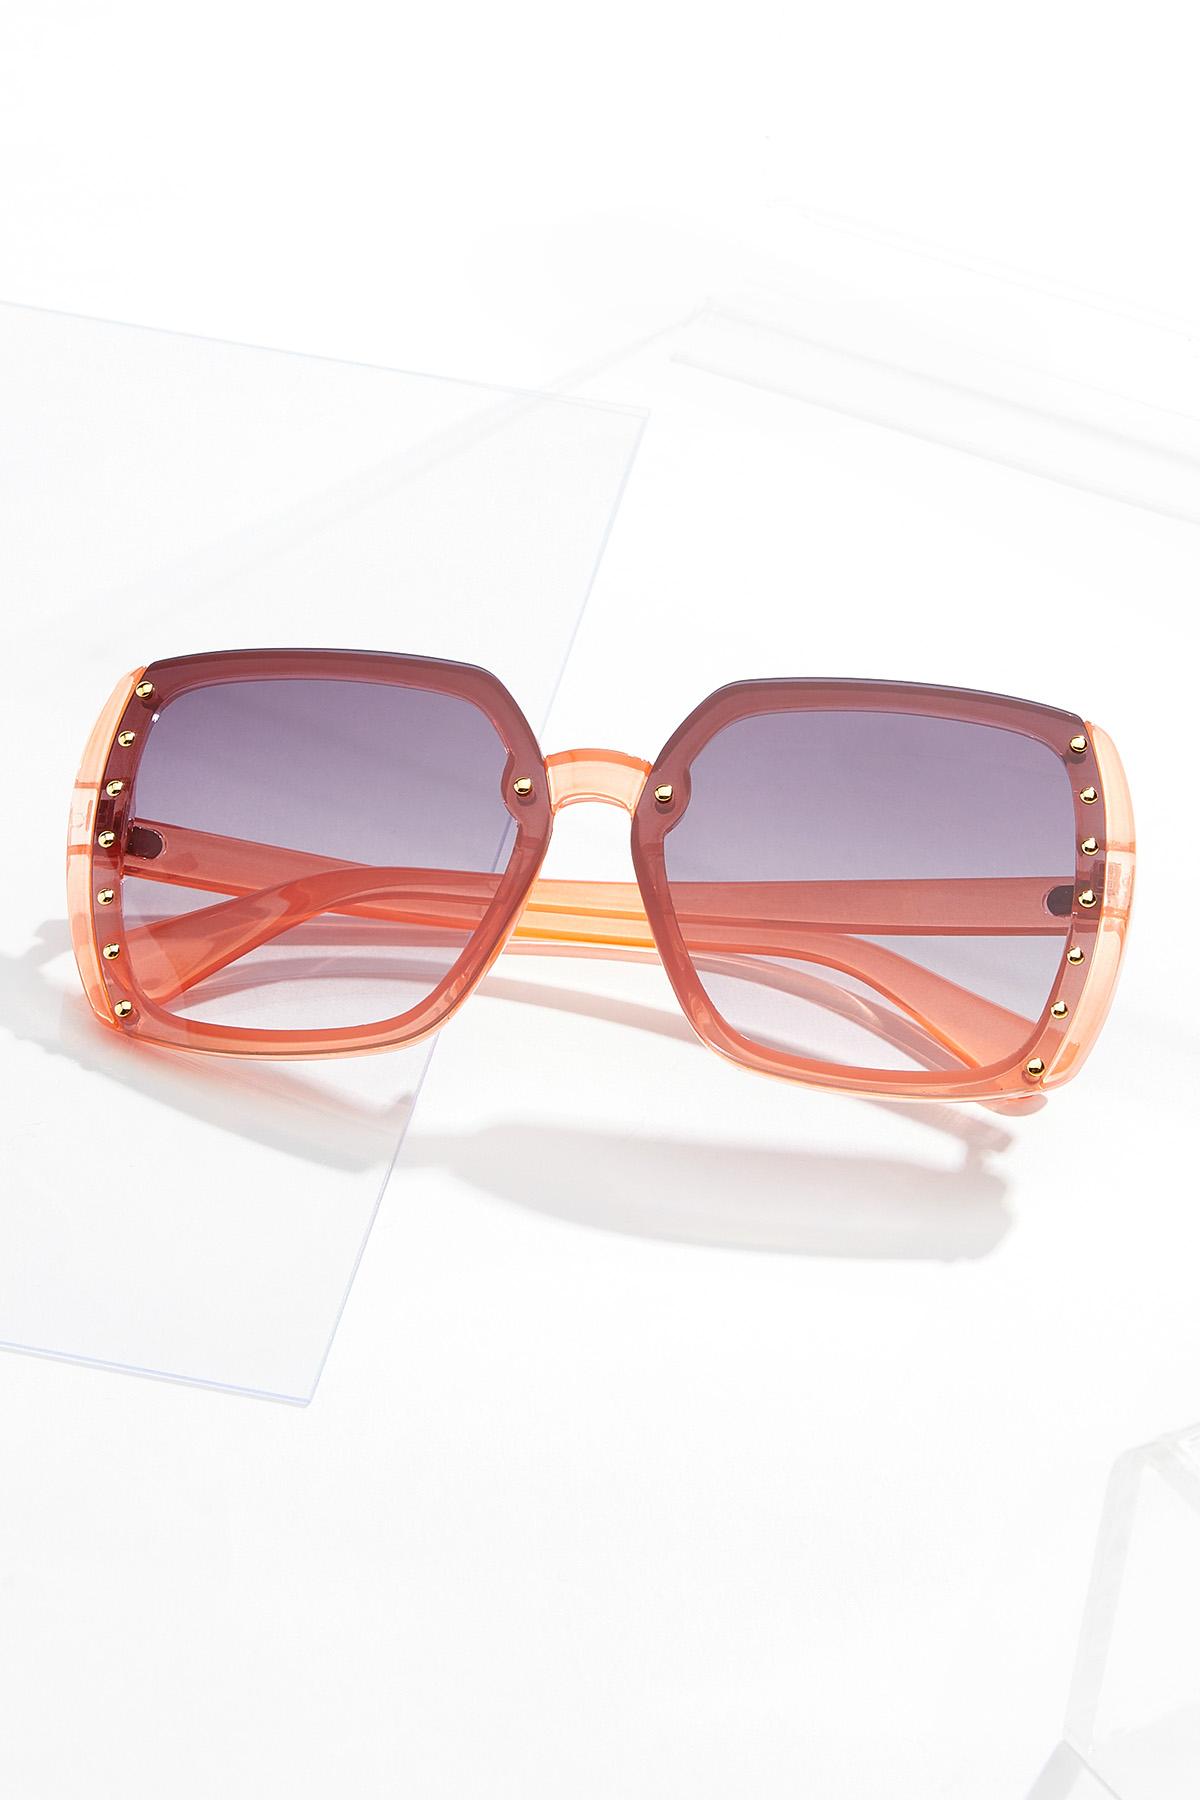 Peachy Oversized Sunglasses